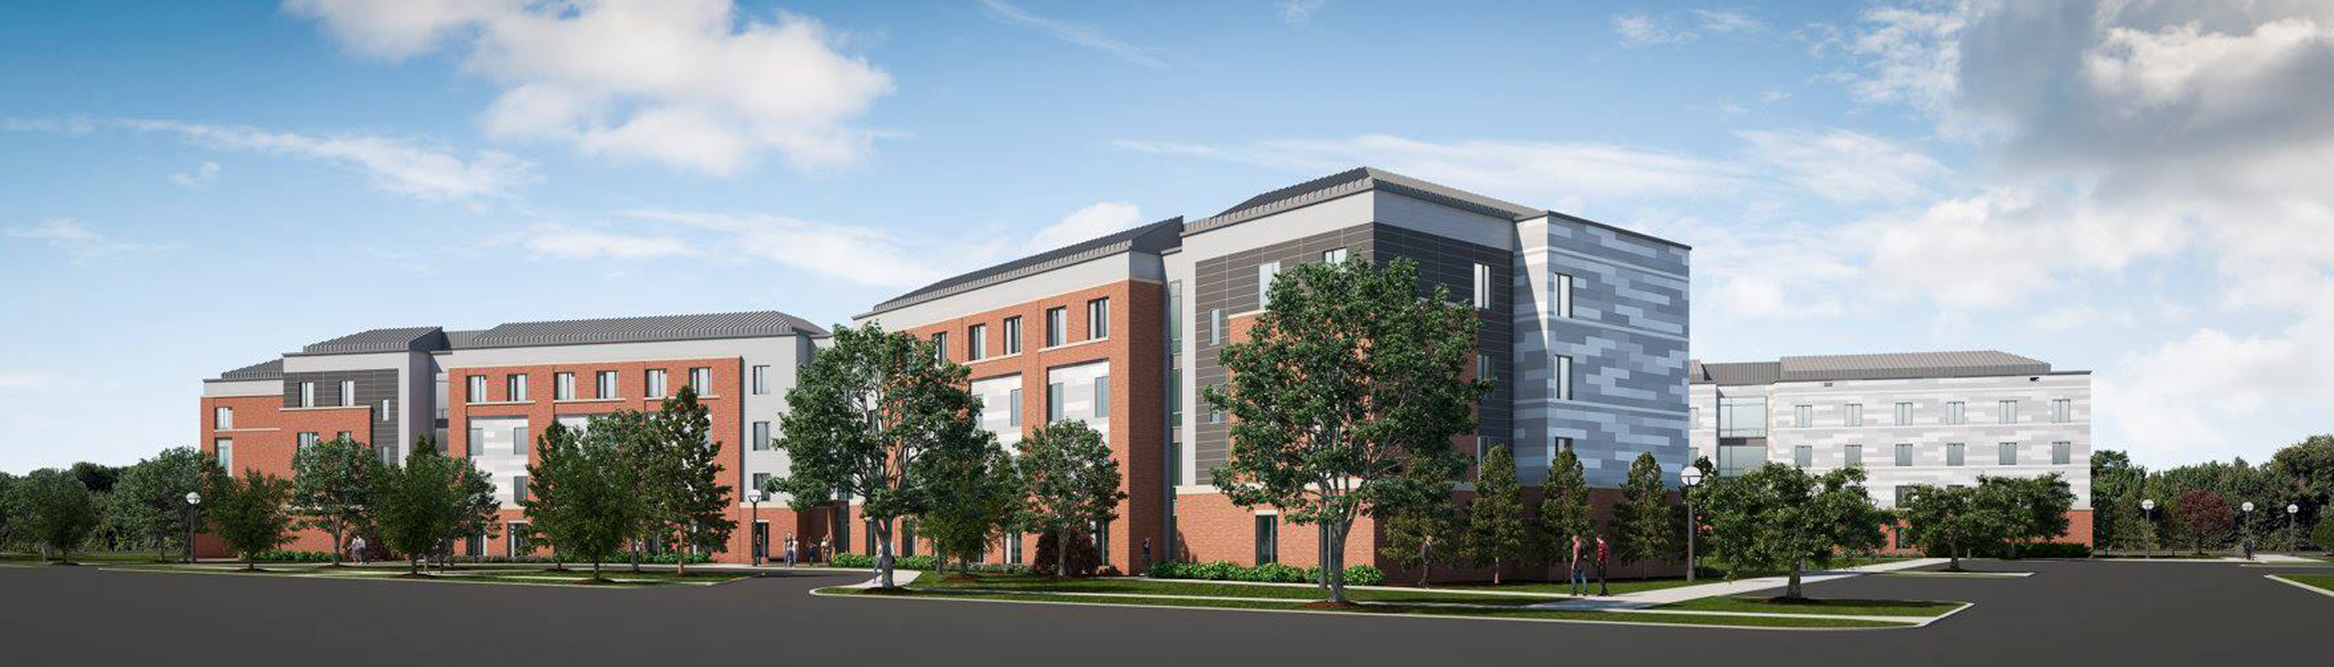 New Residence Hall Under Construction Norfolk State University